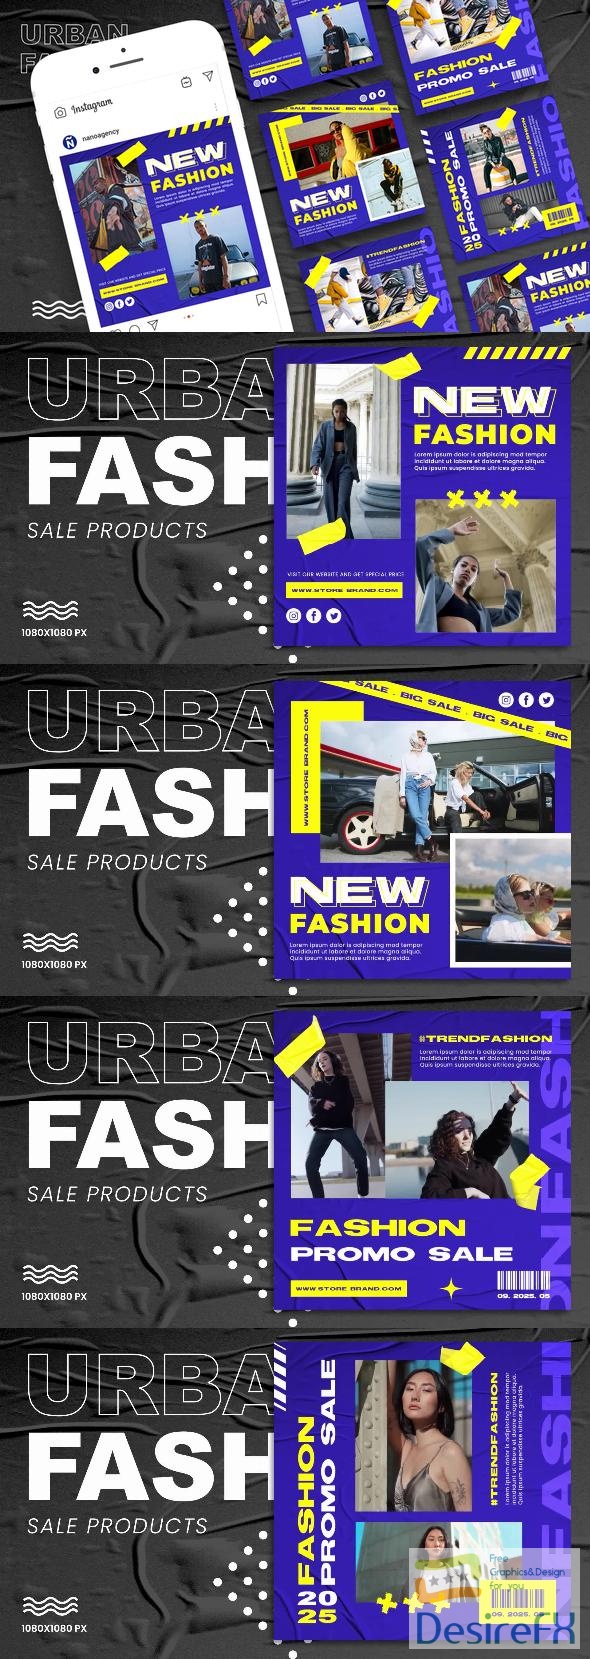 VideoHive Urban Fashion Instagram Media Post 43668692